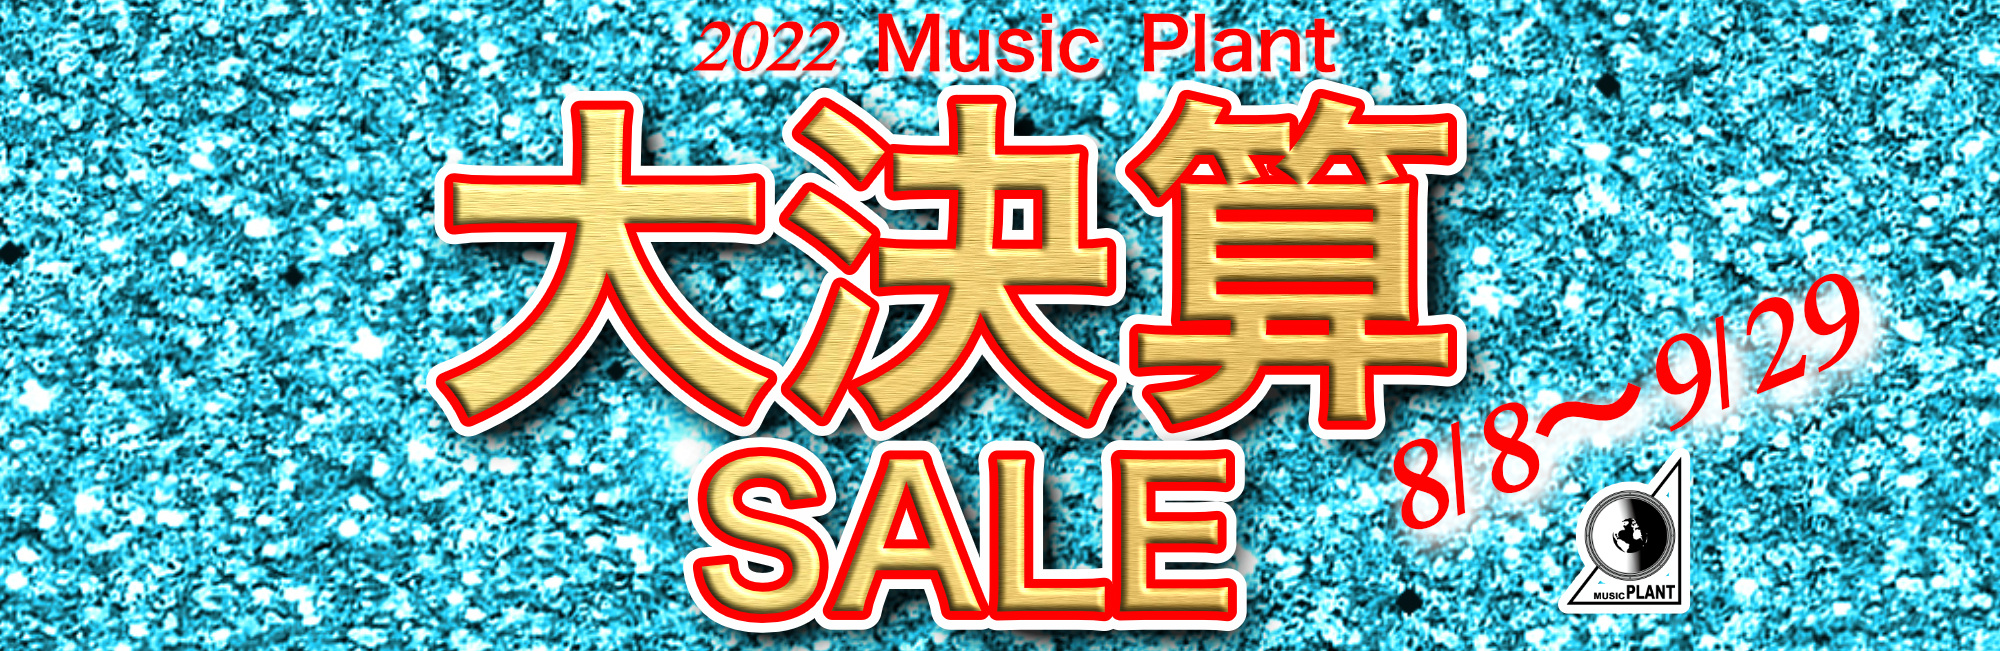 2022 Music Plant 大決算SALE 8/8-9/29